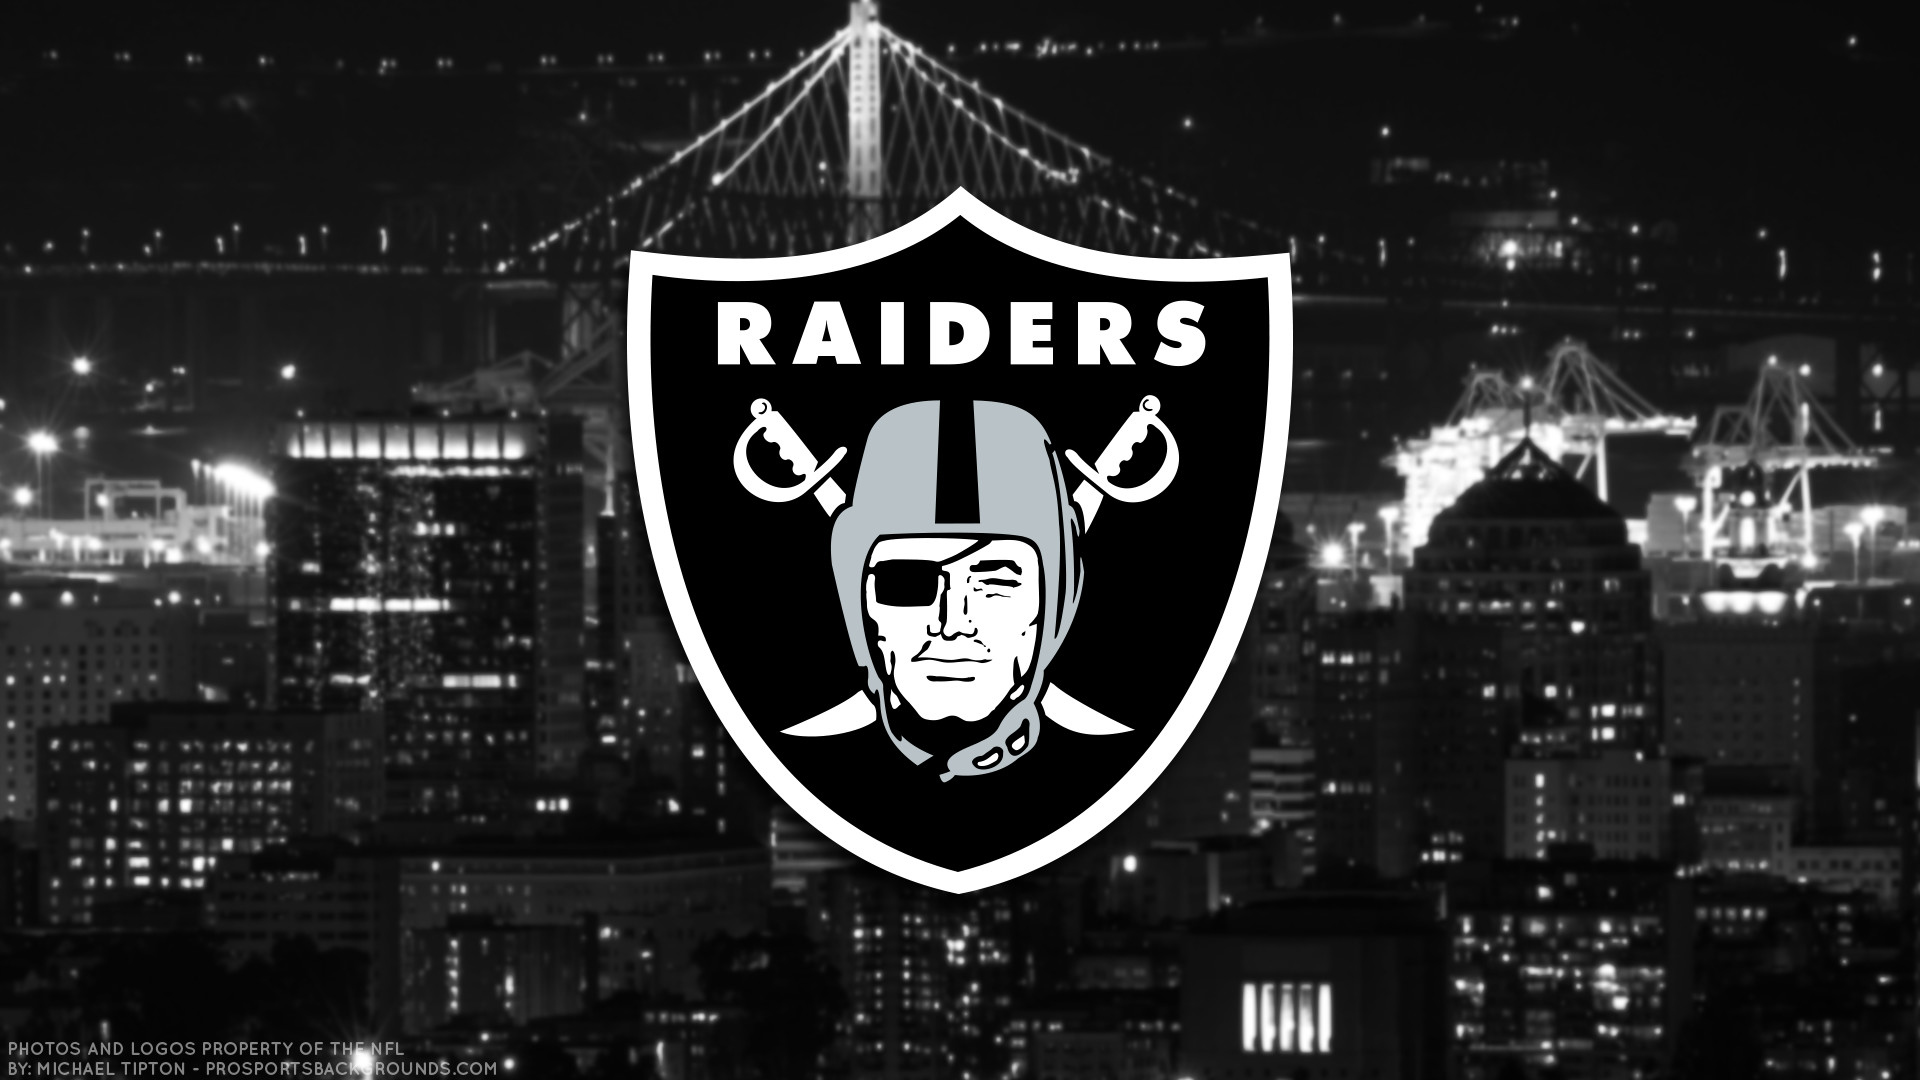 … Oakland Raiders 2017 football logo wallpaper pc desktop computer